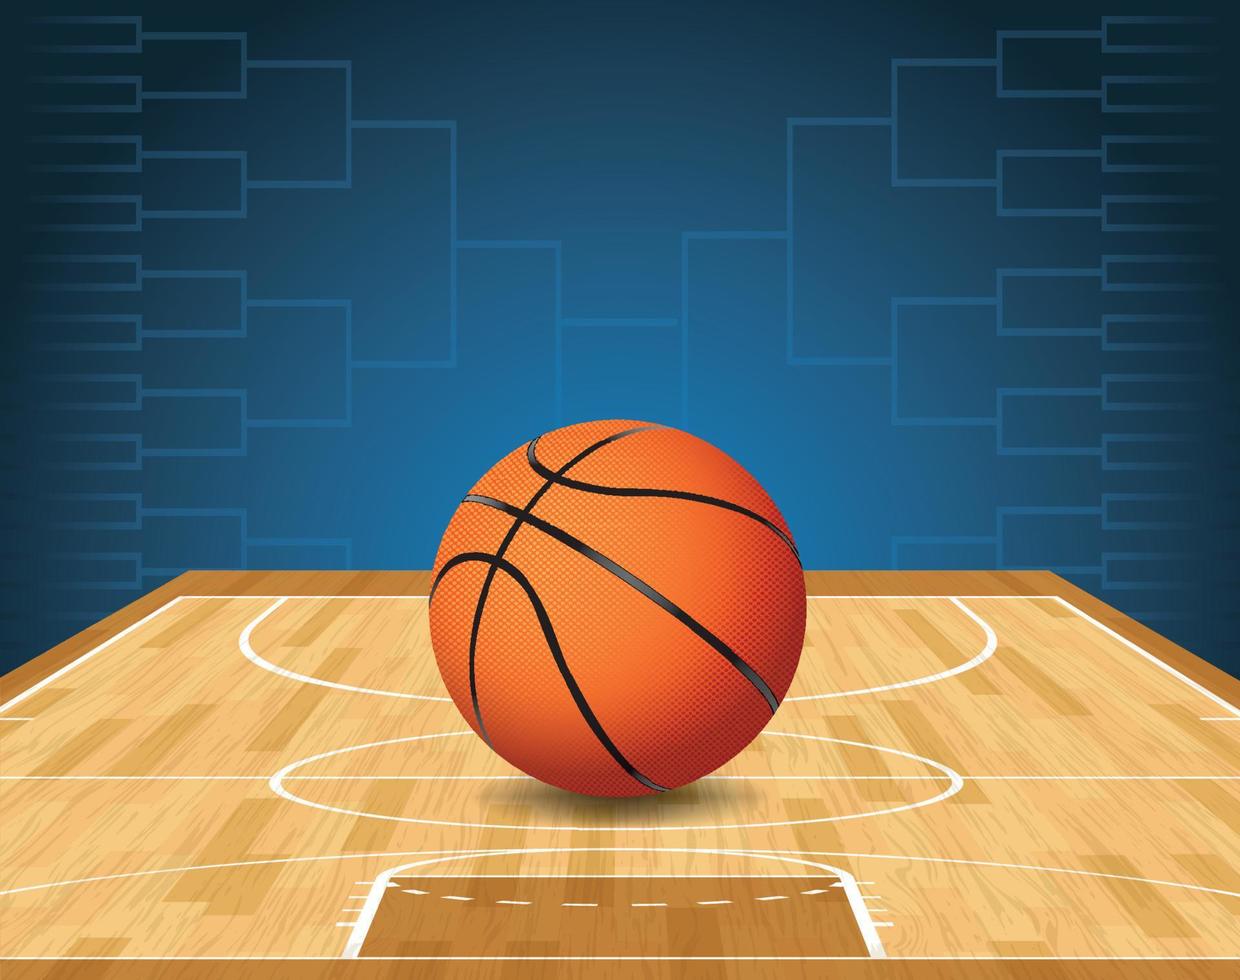 Basketball Court and Ball Tournament Illustration vector